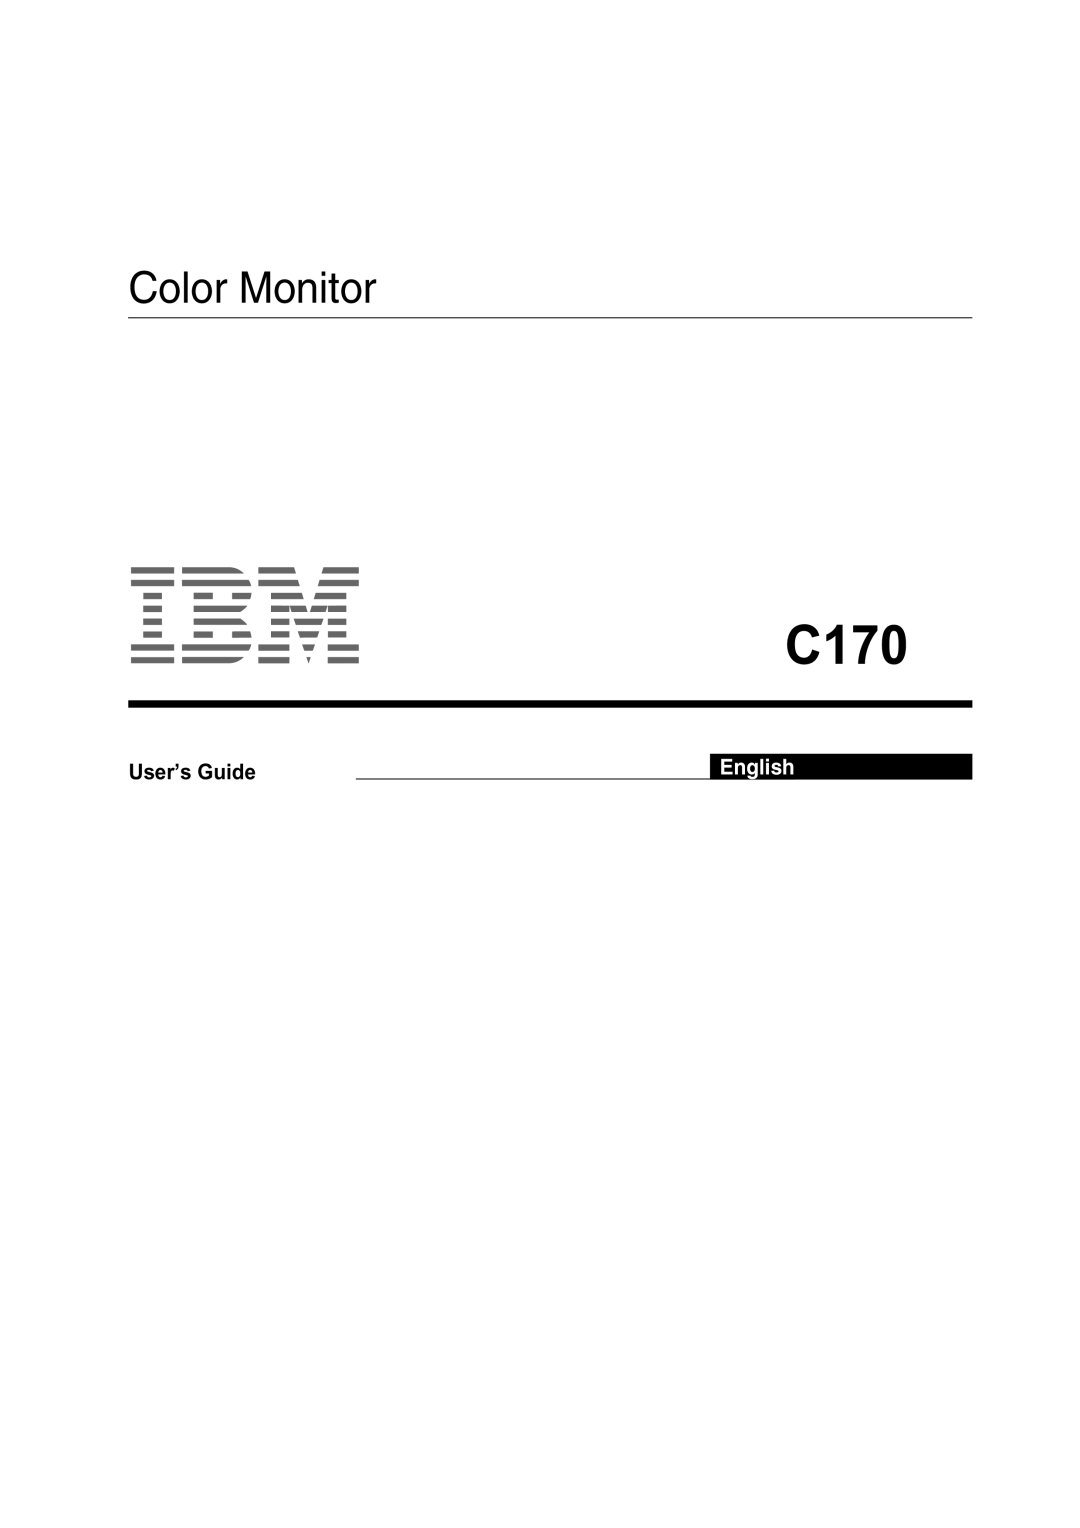 IBM C170 manual Color Monitor, User’s Guide, English 